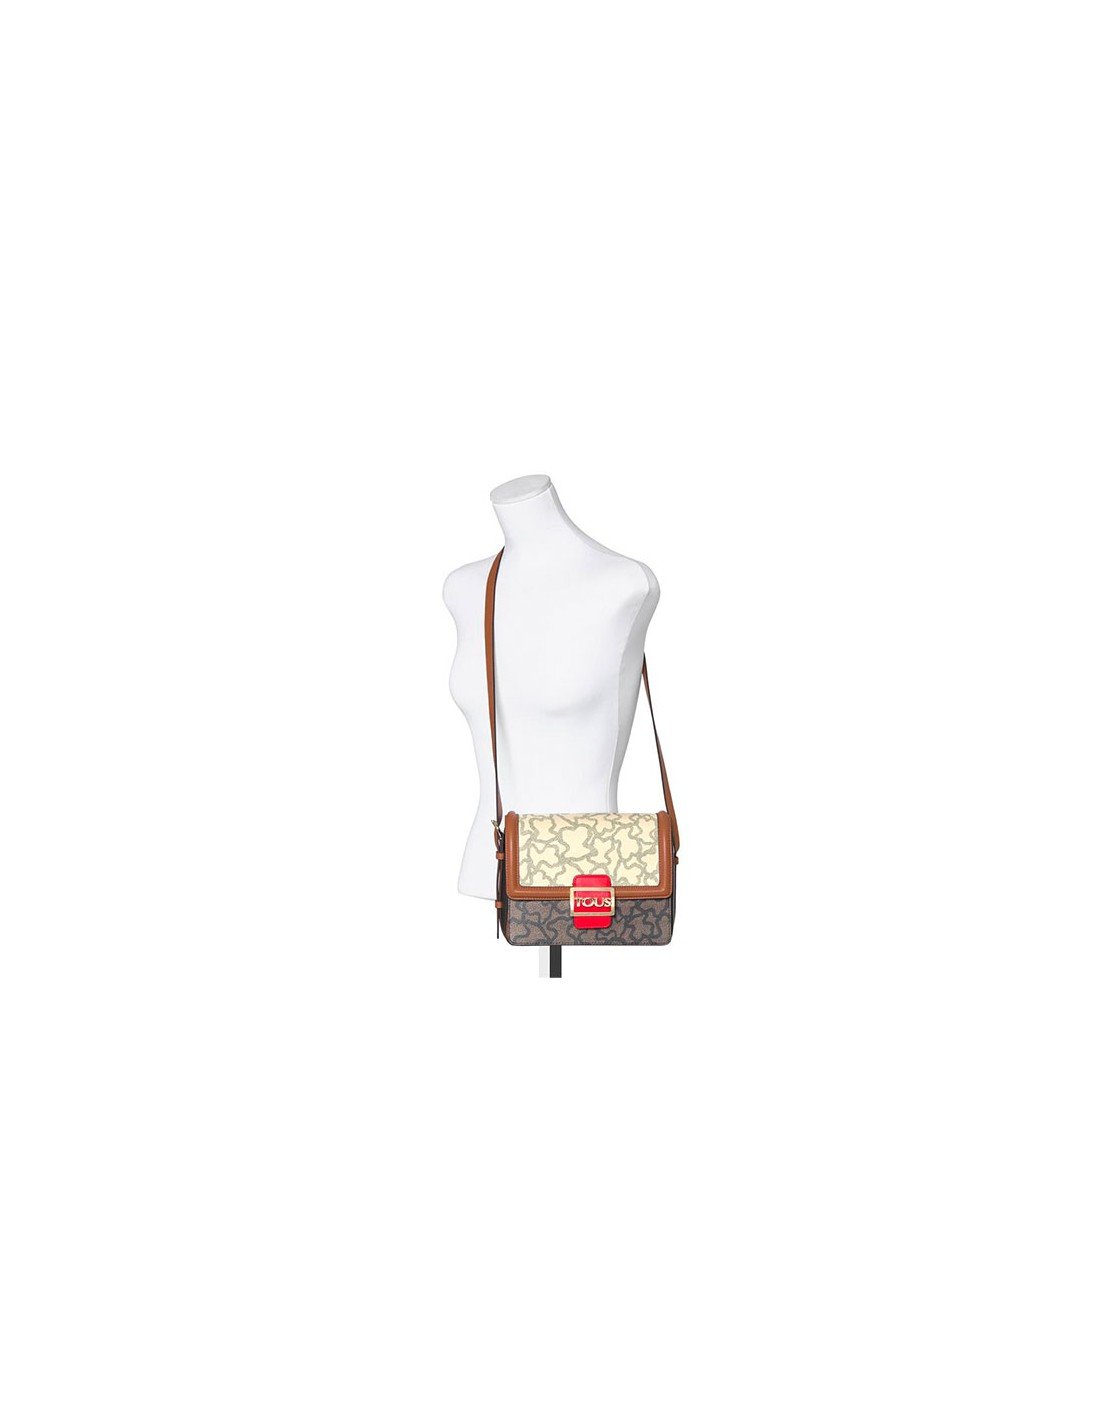 Tous Medium Beige-Red Kaos Icon Multi Crossbody Bag, latest offers on Tous  Moda fashion accessories